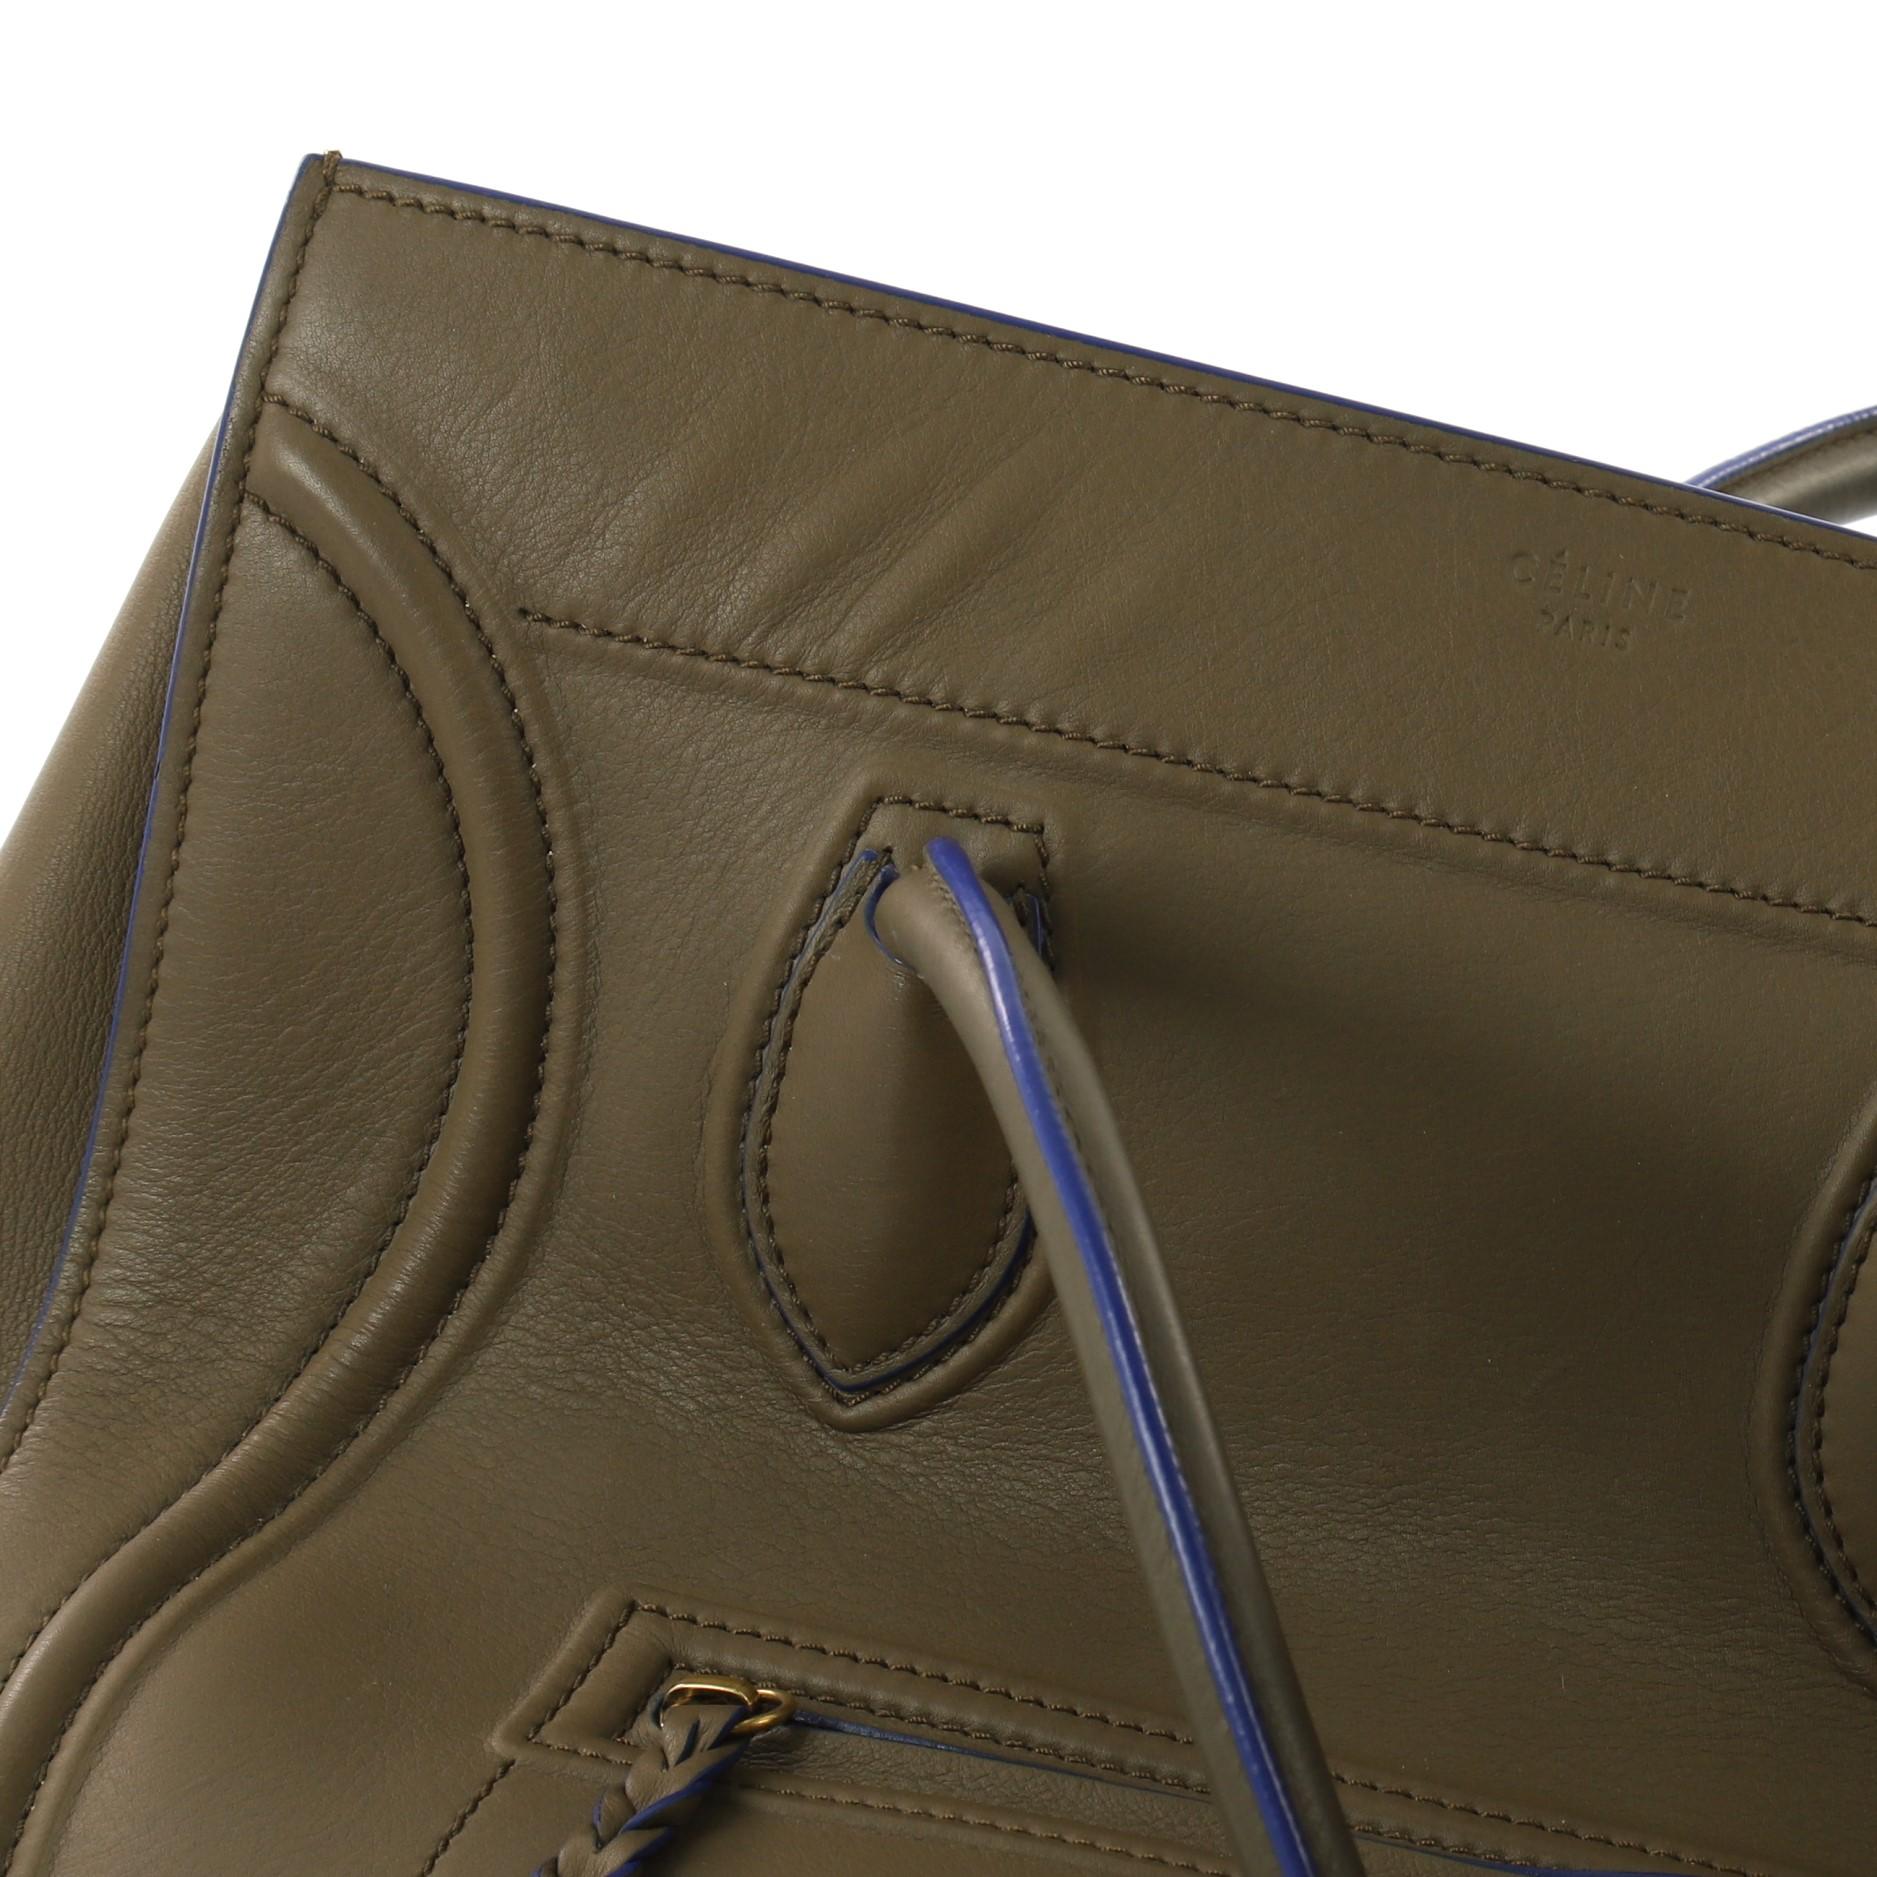  Celine Phantom Handbag Smooth Leather Large 3